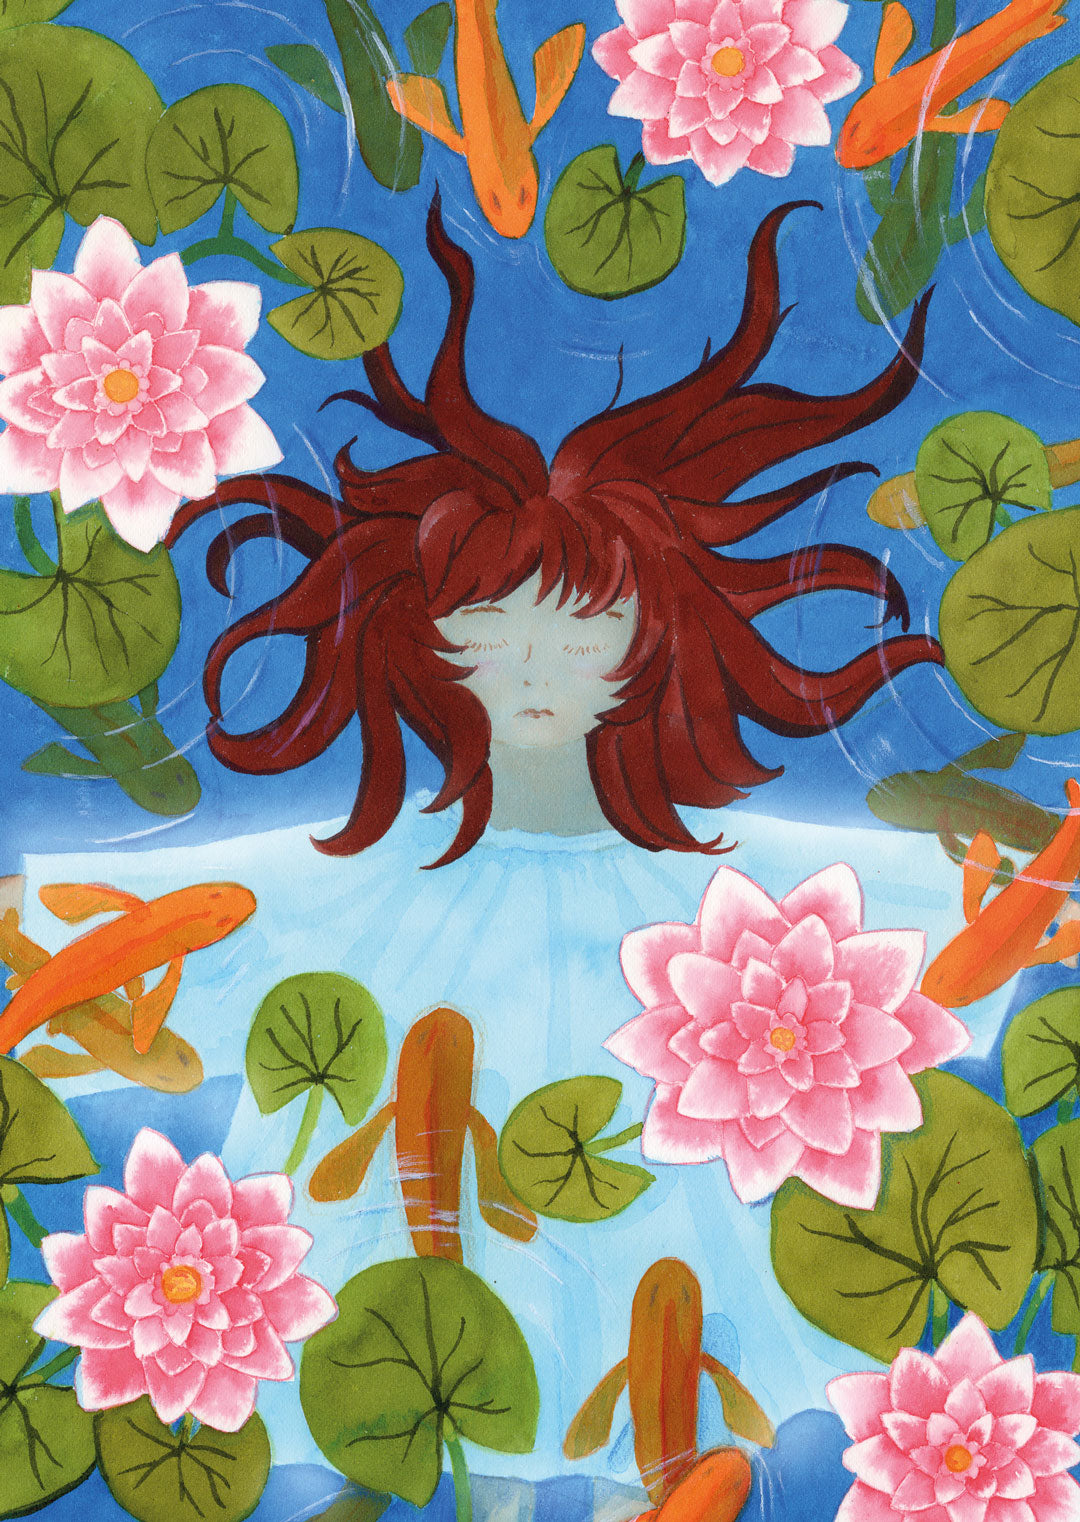 Aquarell - Mädchen im Seerosenteich - 26x30cm - Kunstdruck auf Aquarellpapier - Boho Stil